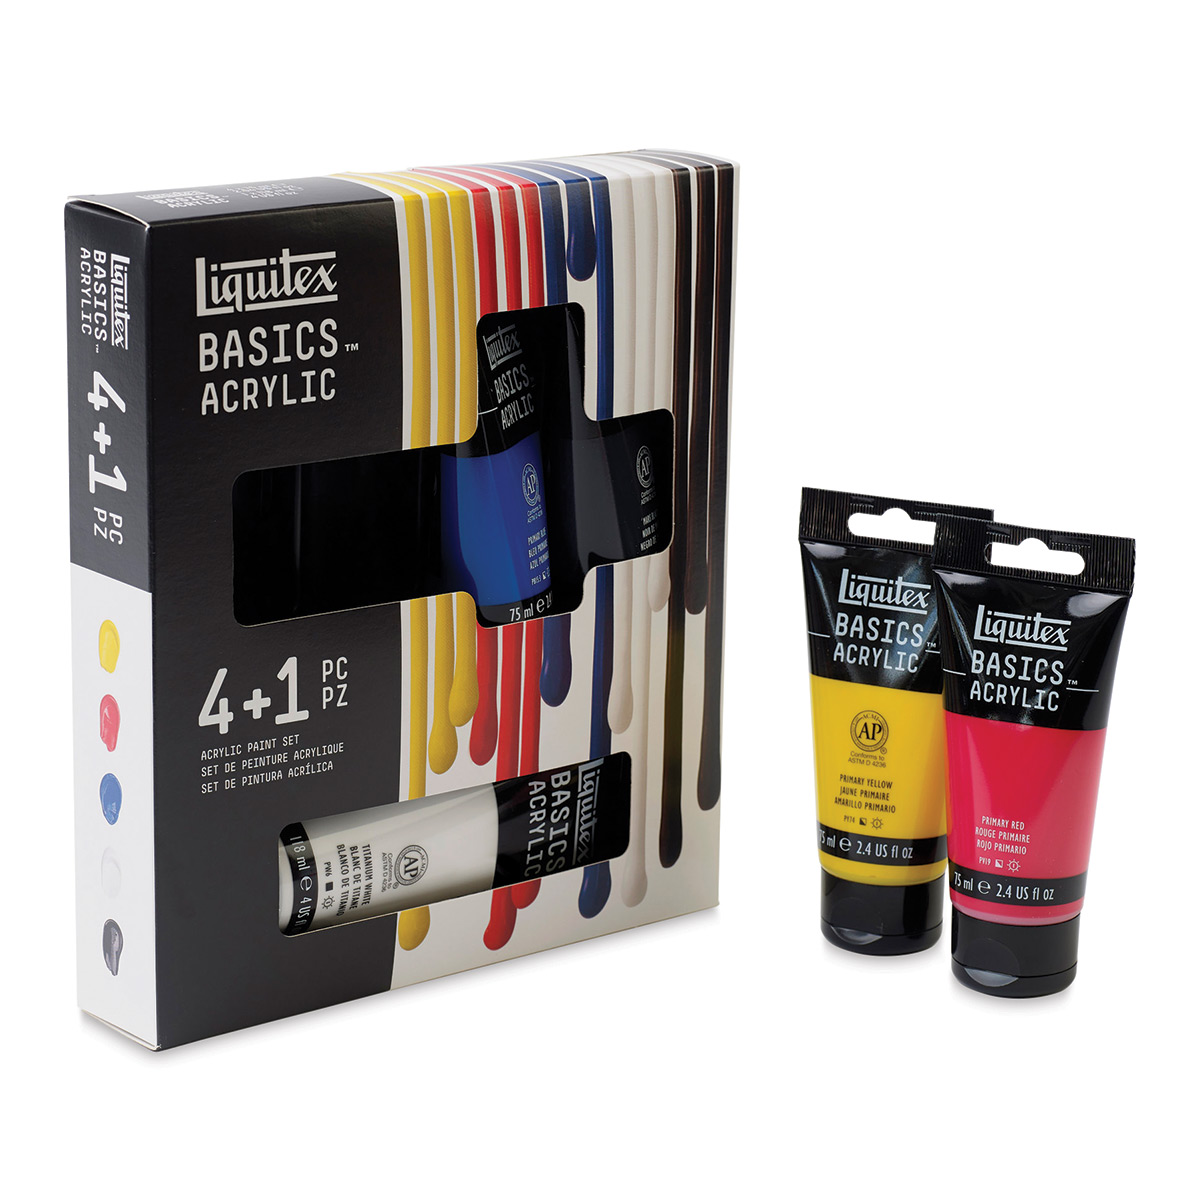 Liquitex Basics Acrylic Paint - Best Sellers Set of 24